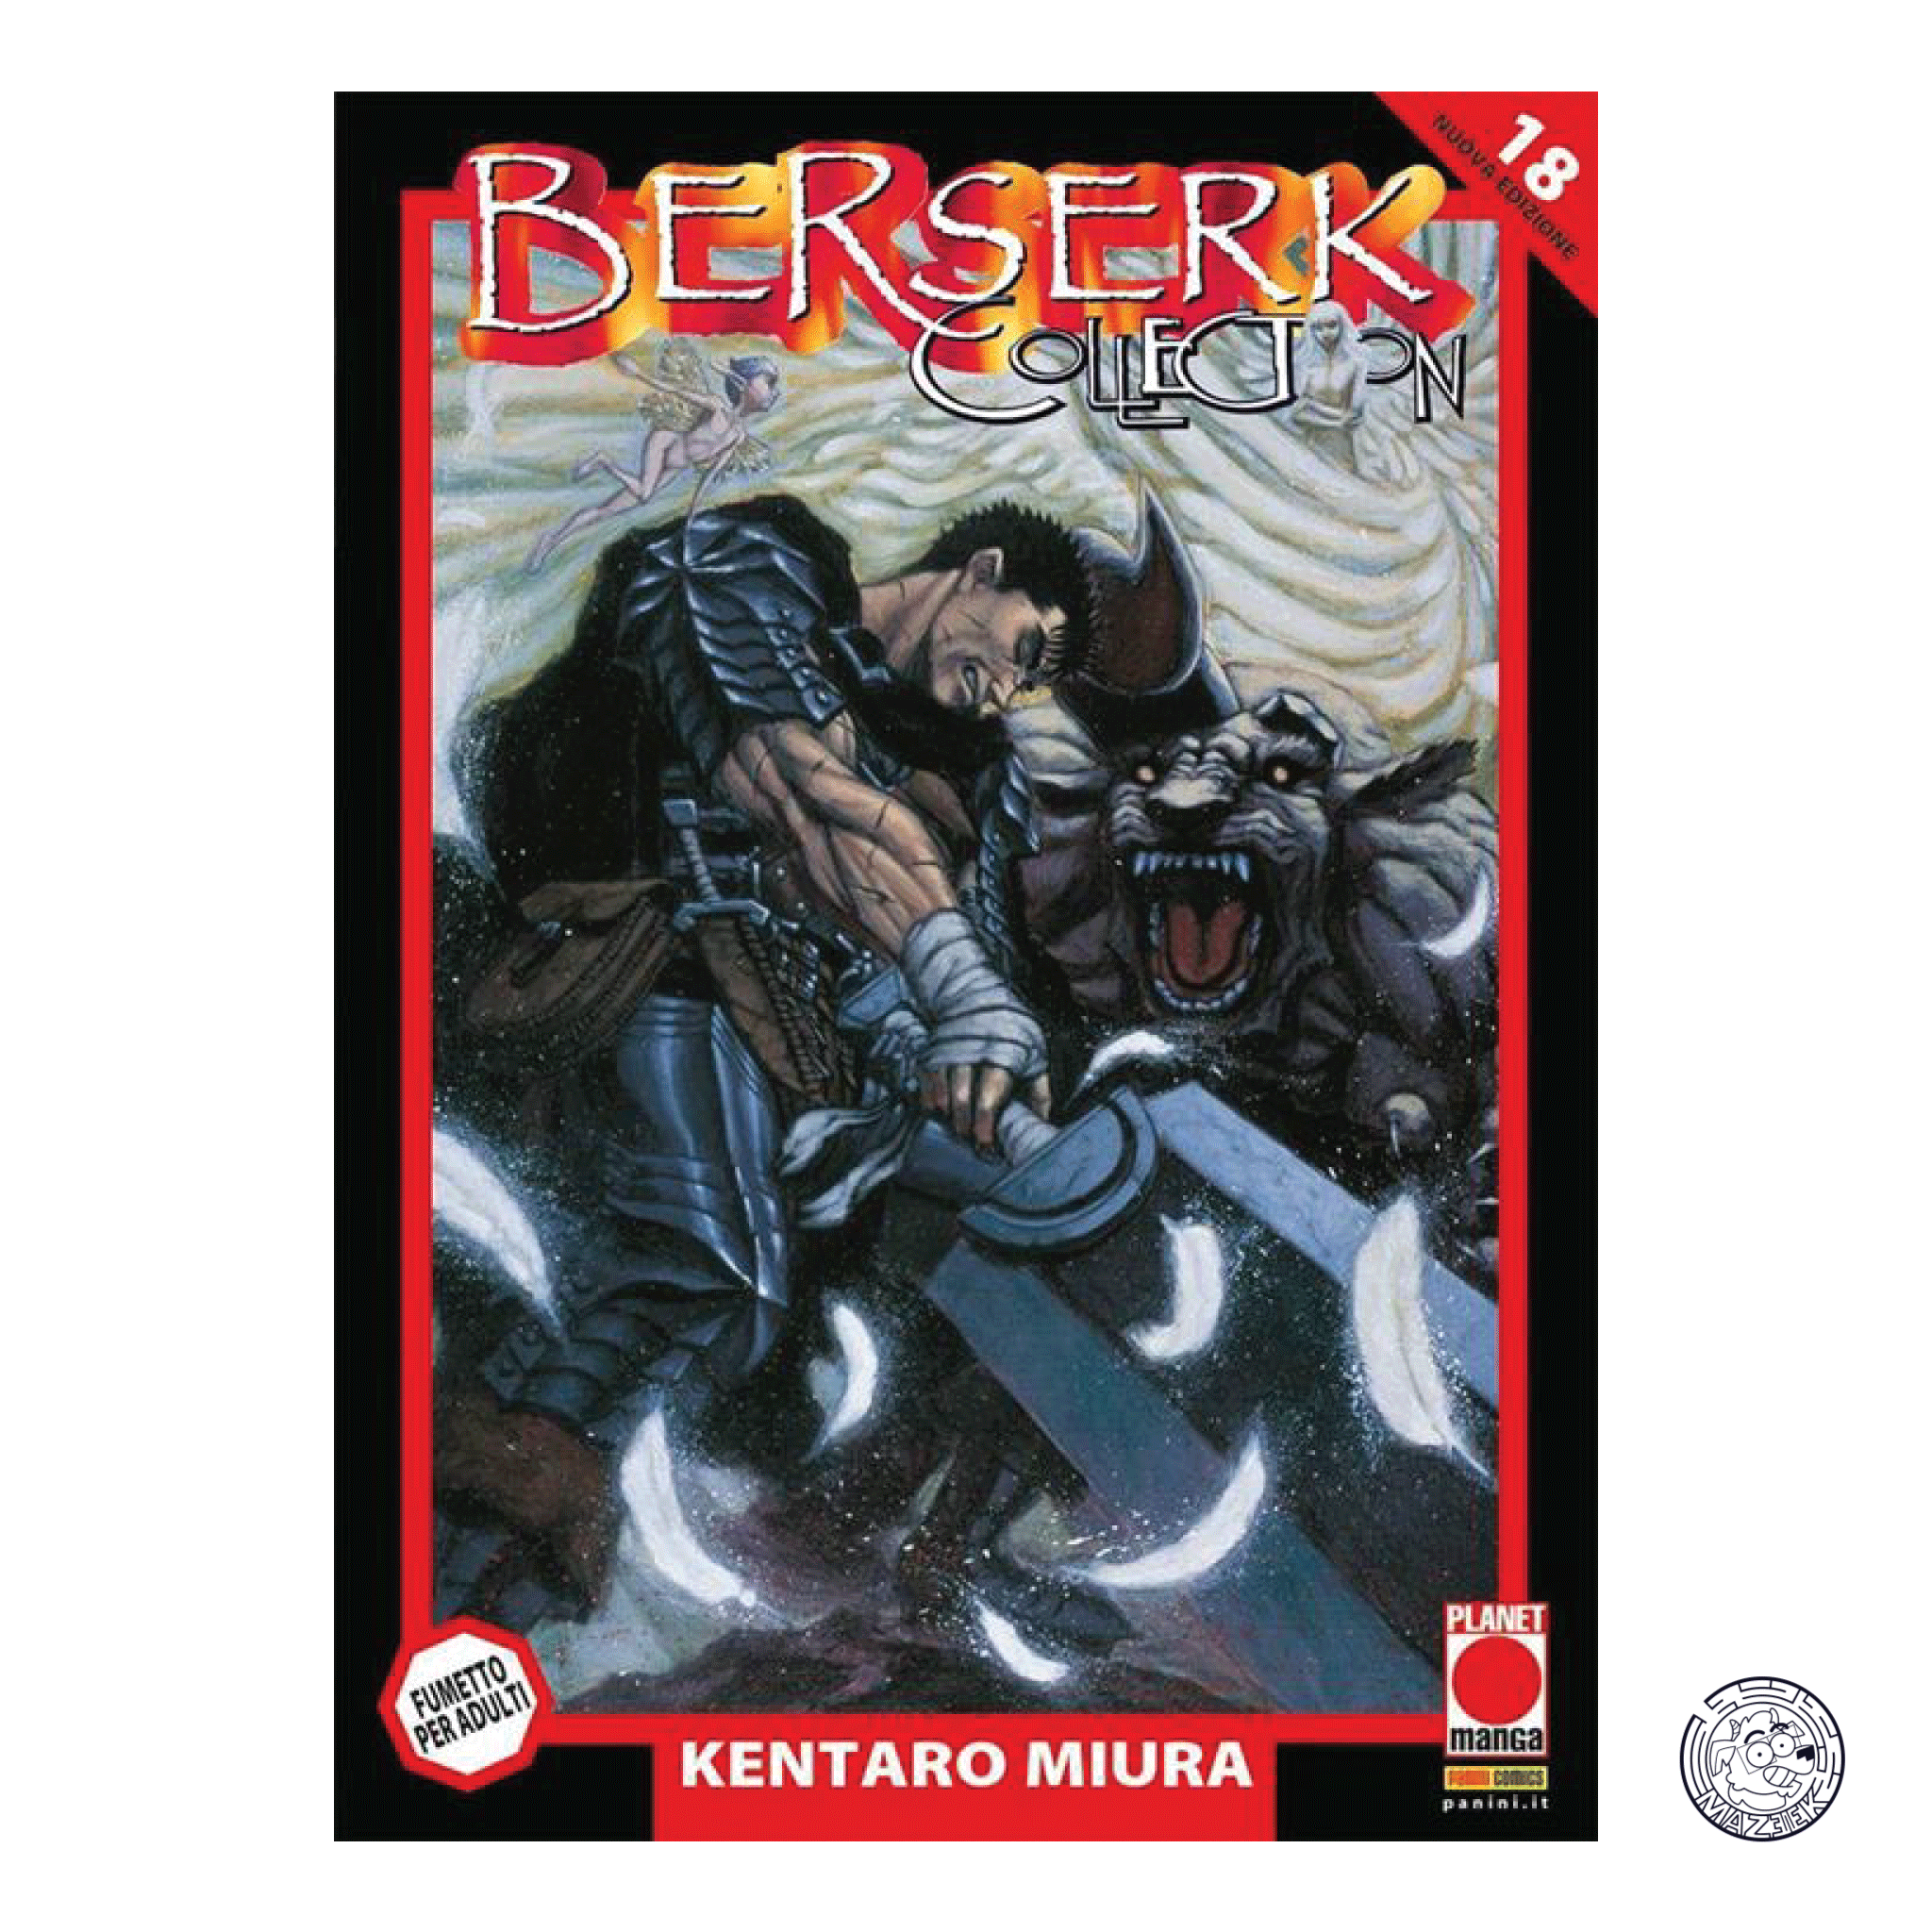 Berserk Collection Black Series 18 - Reprint 4